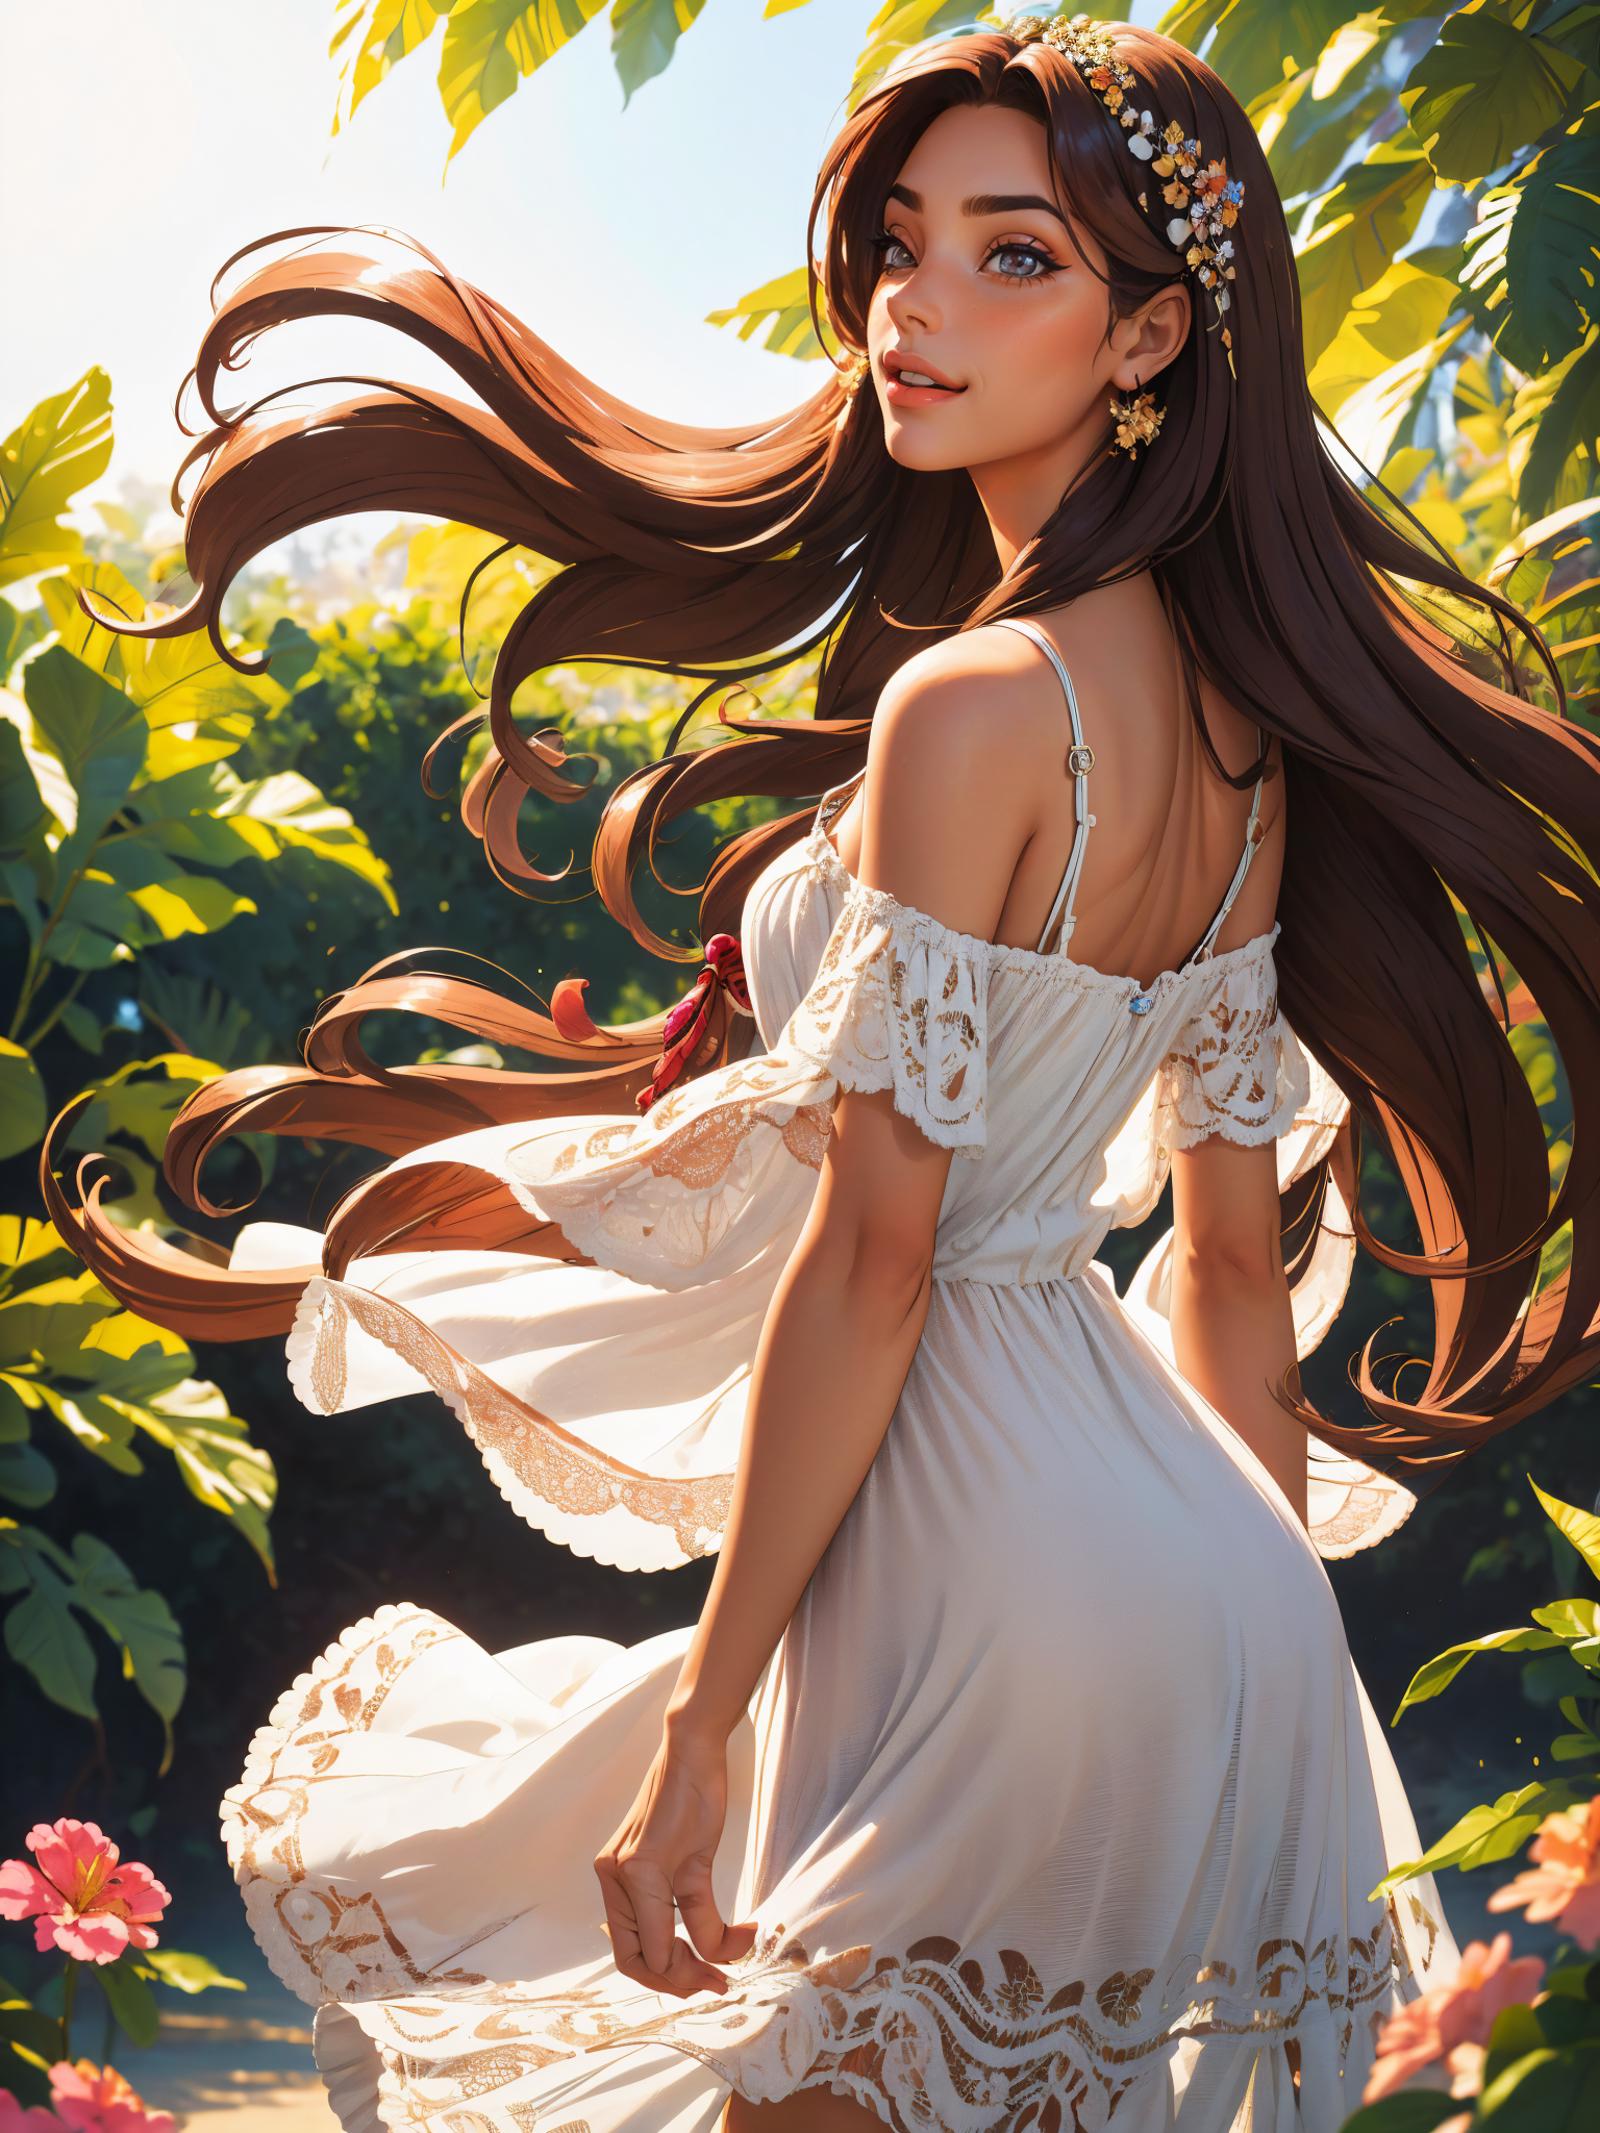 A beautiful woman in a white dress posing in a field of flowers.